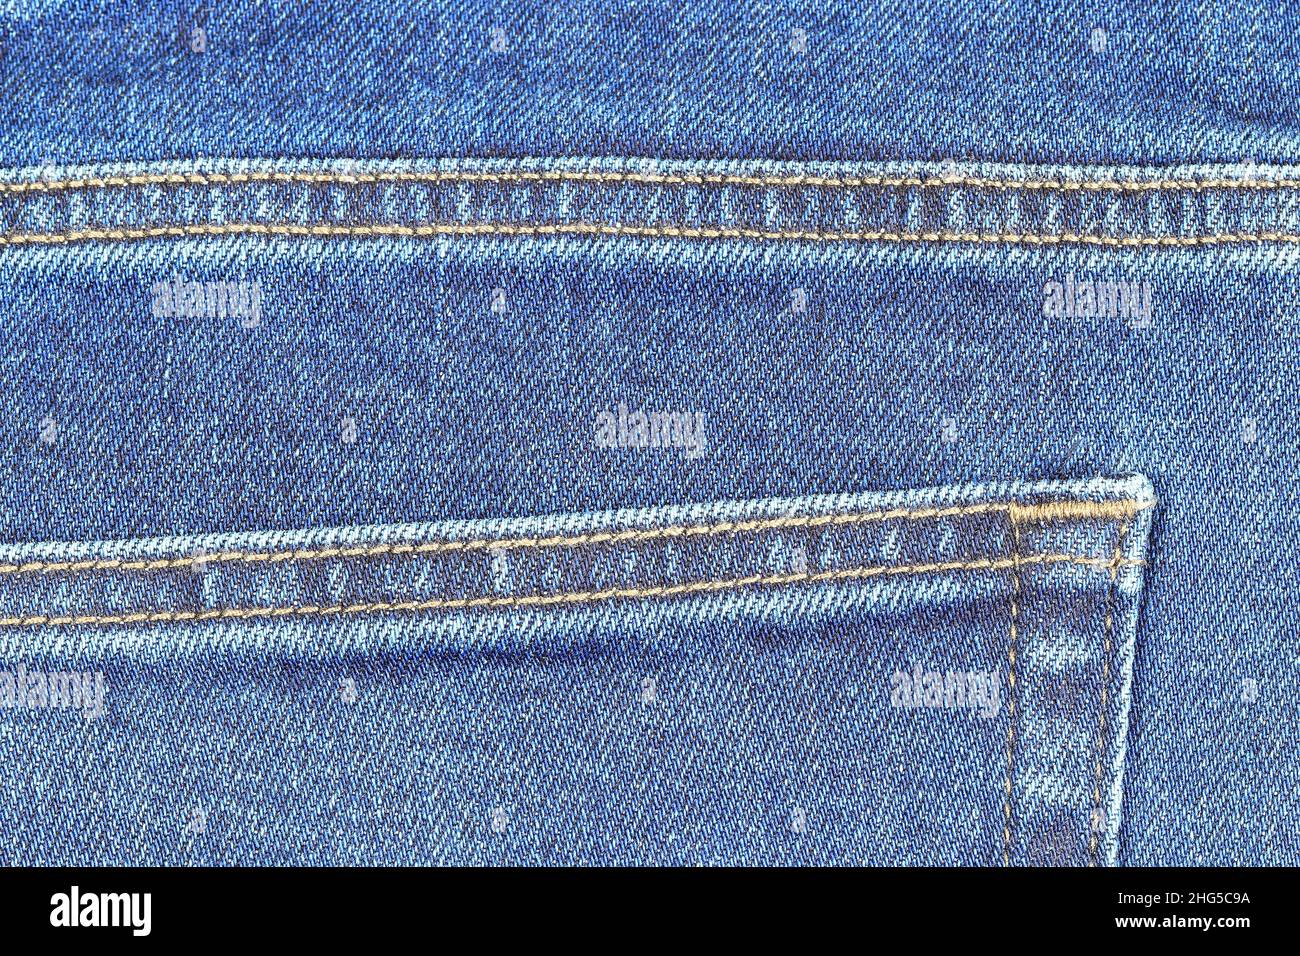 Detail of Back pocket of denim Jeans, Blue Jeans texture vintage background. Stock Photo